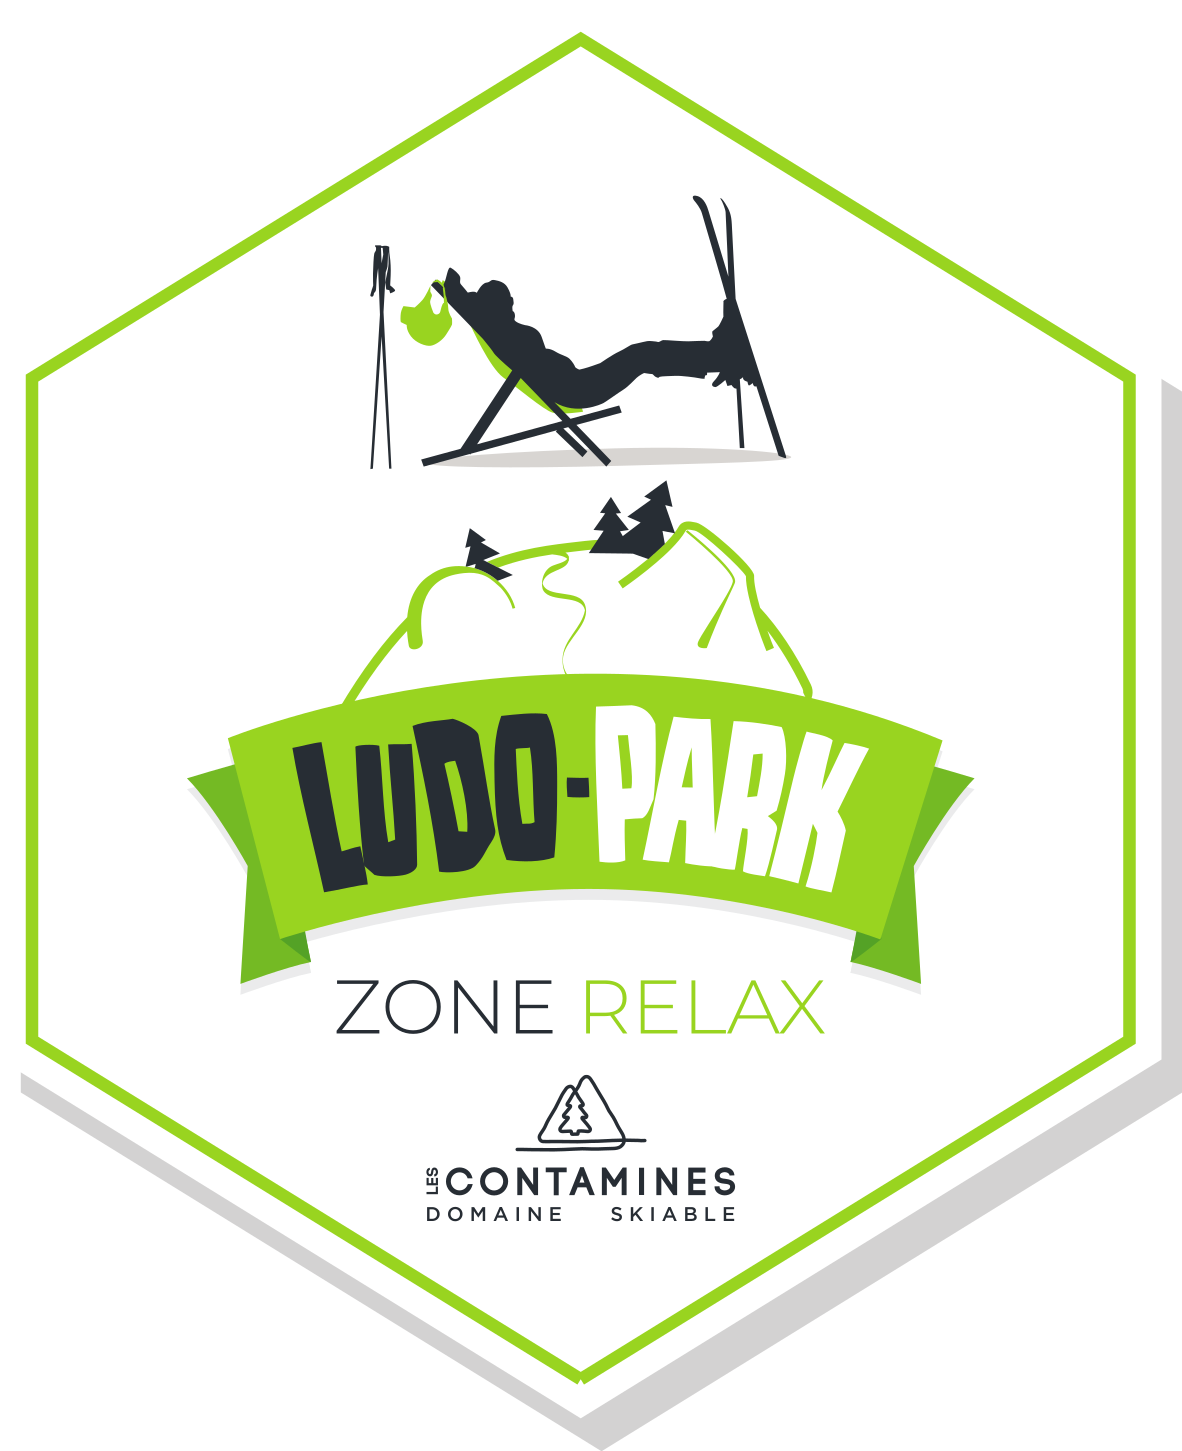 Logo Zone Relax du Ludo Park